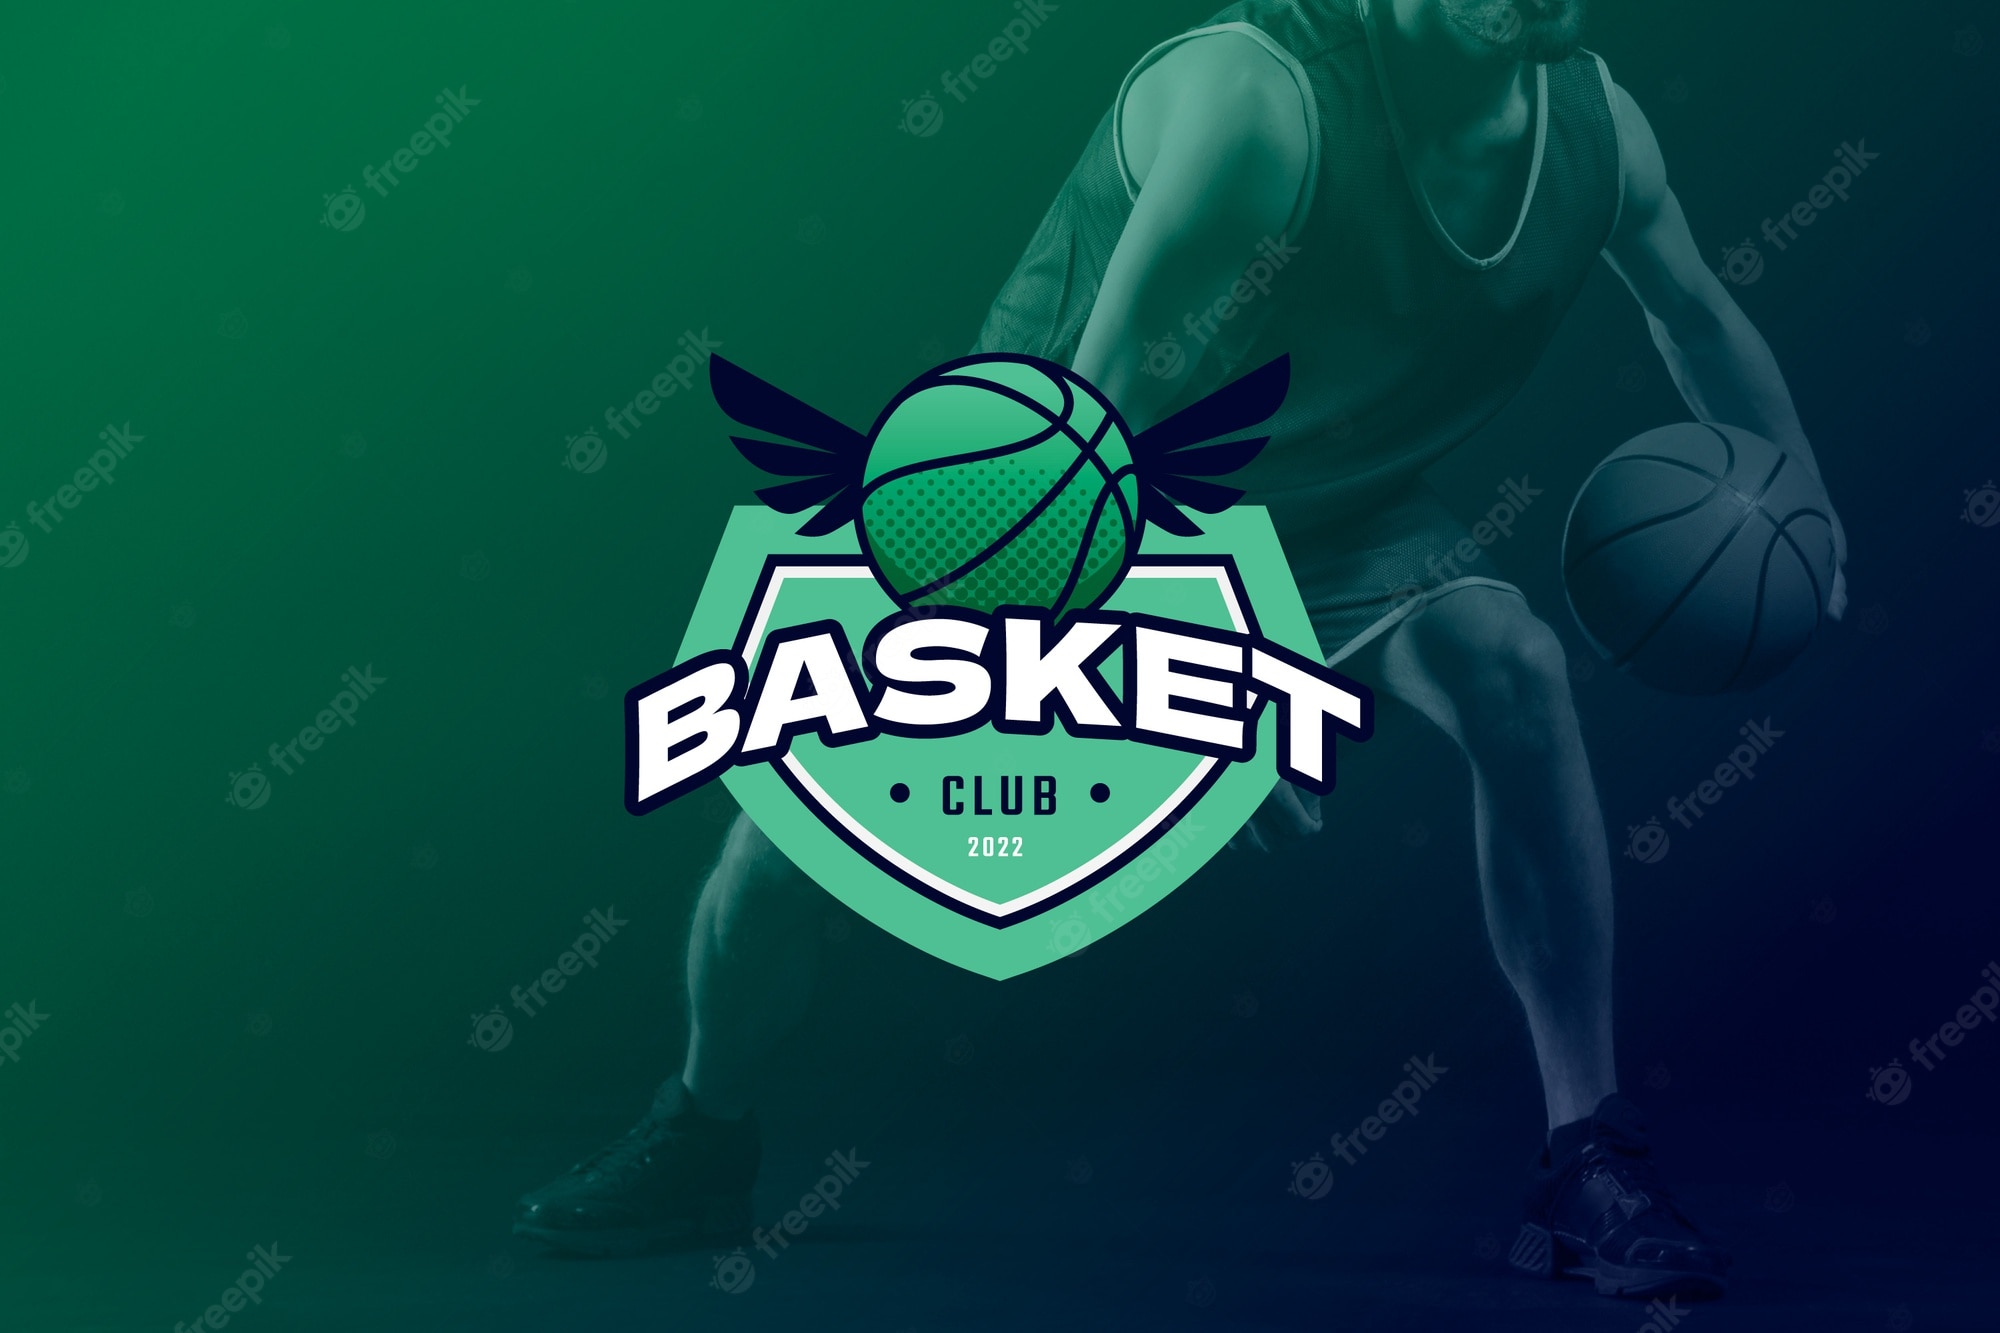 Basketball logo sports Image. Free Vectors, & PSD